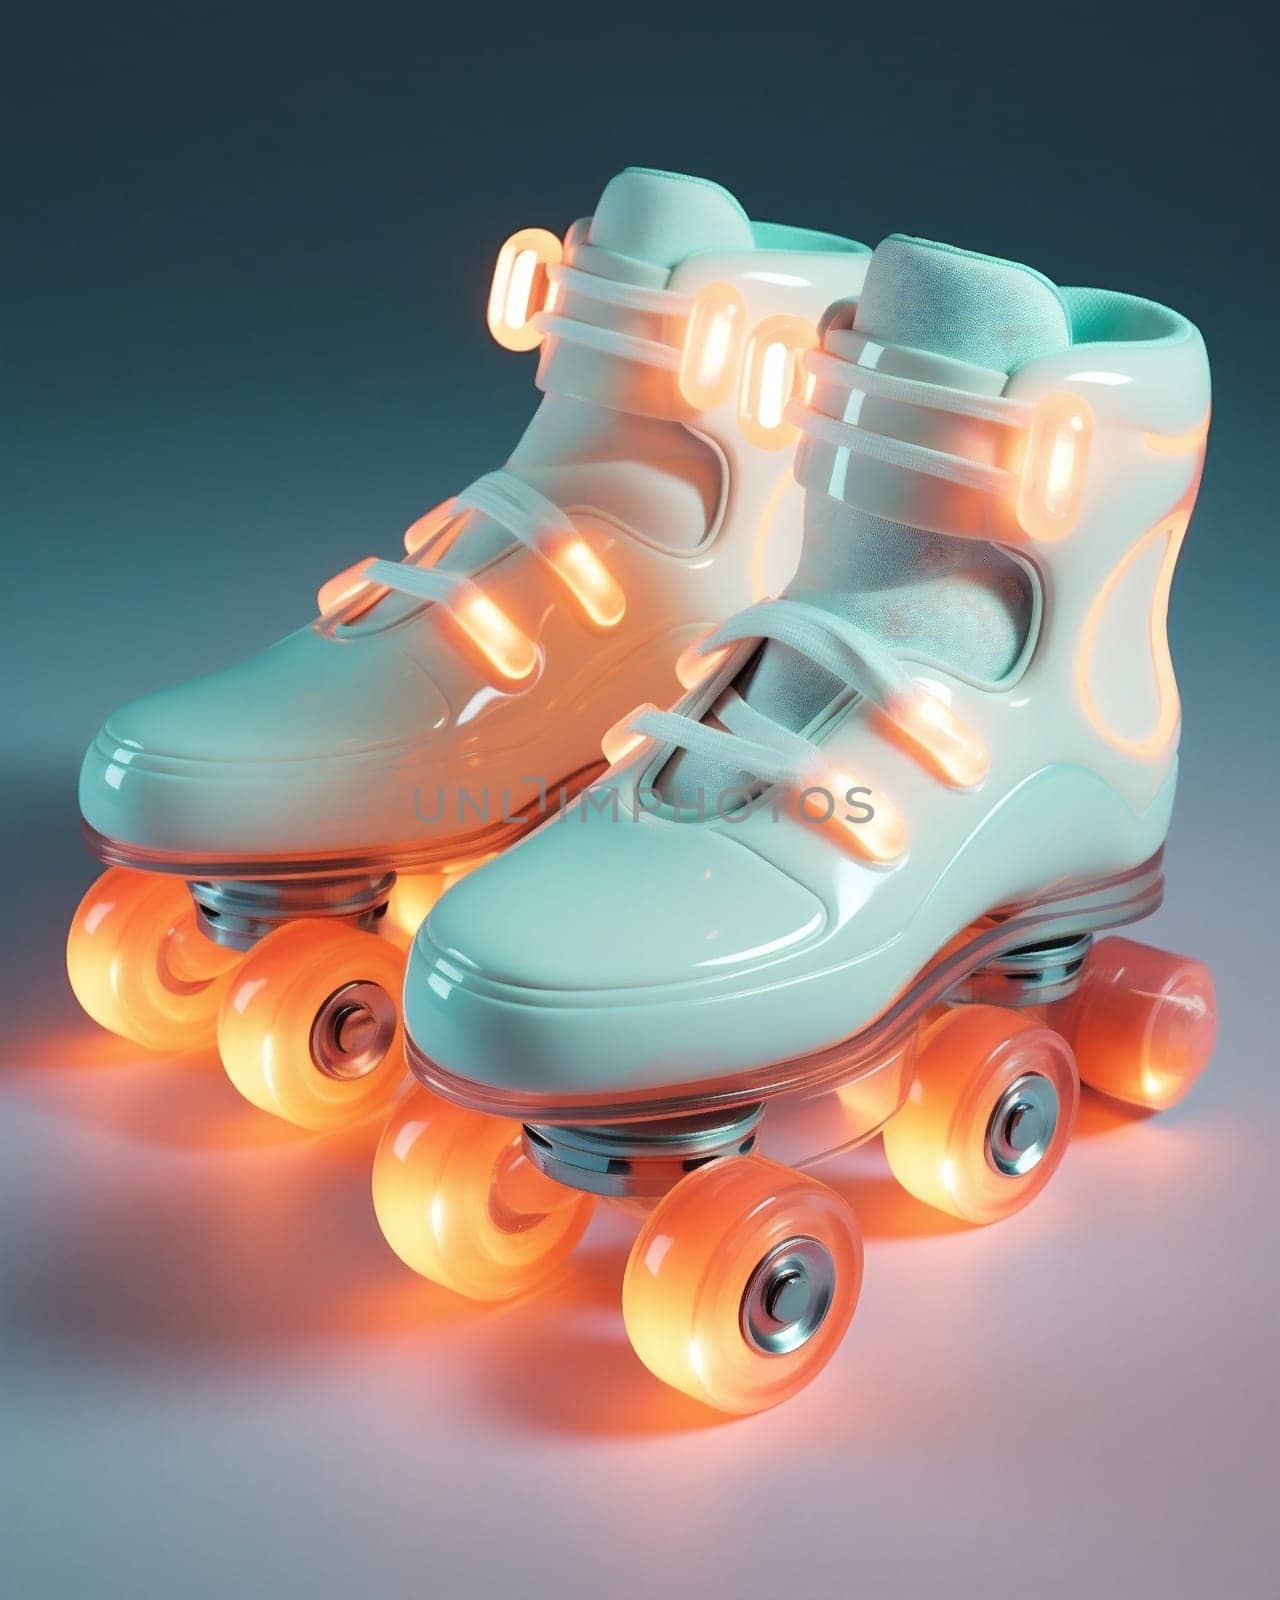 Fun girl equipment skate shoe wheels female leisure roller recreation speed sport by Vichizh